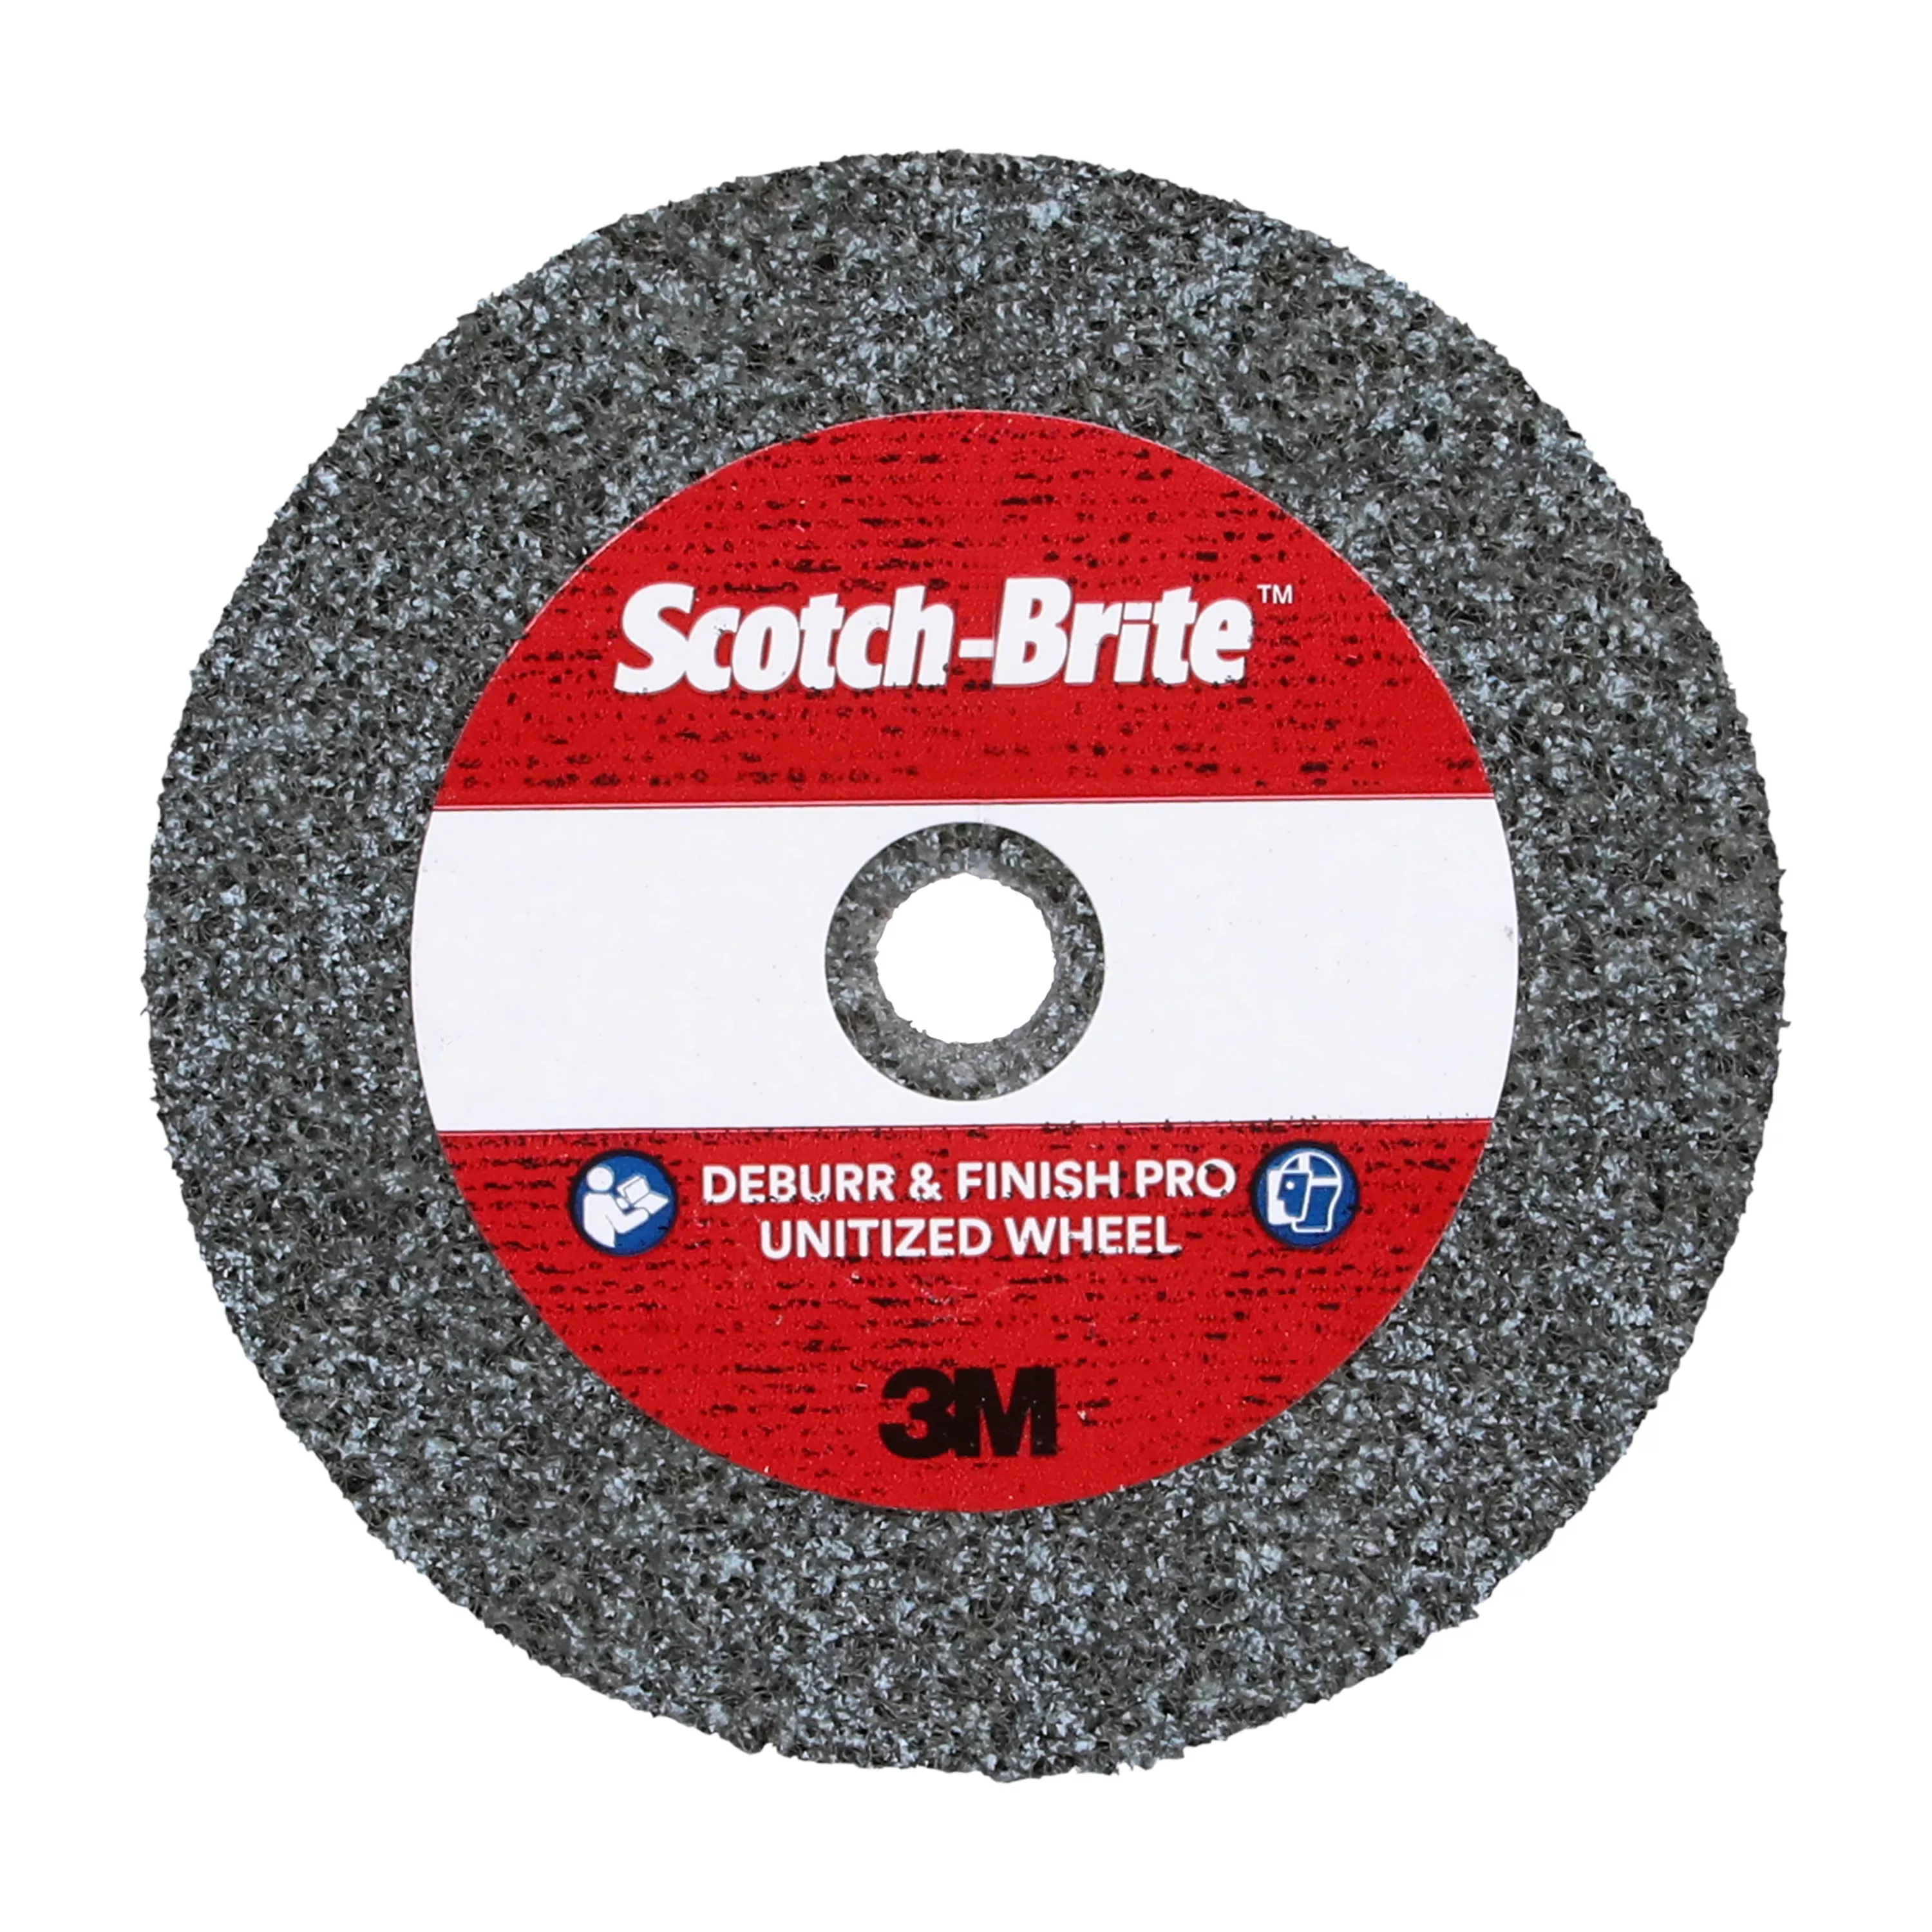 SKU 7100053416 | Scotch-Brite™ Deburr & Finish Pro Unitized Wheel